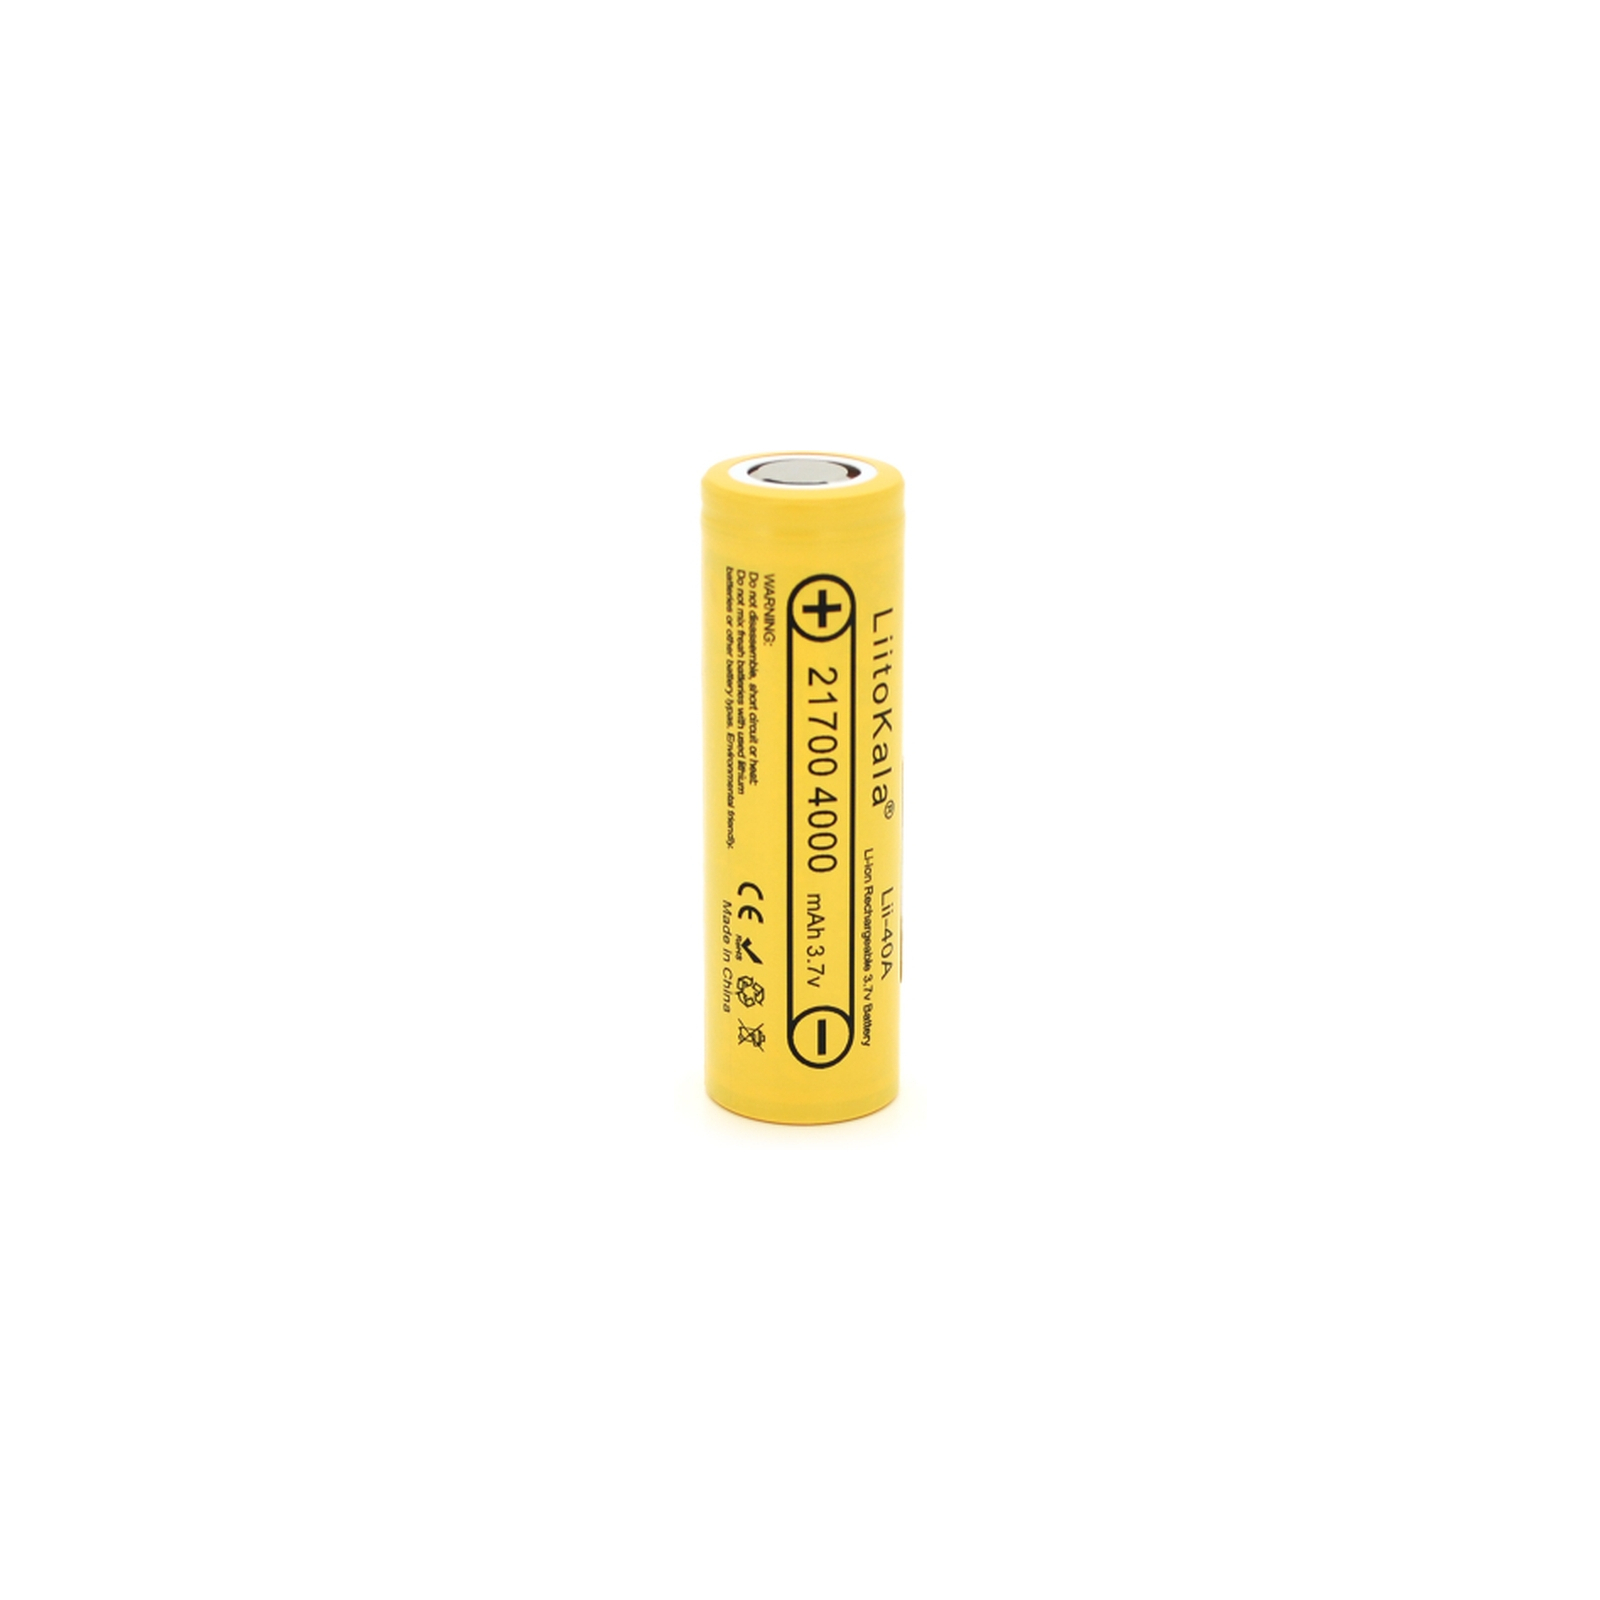 Акумулятор 21700 Li-Ion, 4000mah (4000-4300mah), 25A, 3.7V (2.5-4.2V), Yellow, PVC BOX Liitokala (Lii-40A / 23385)